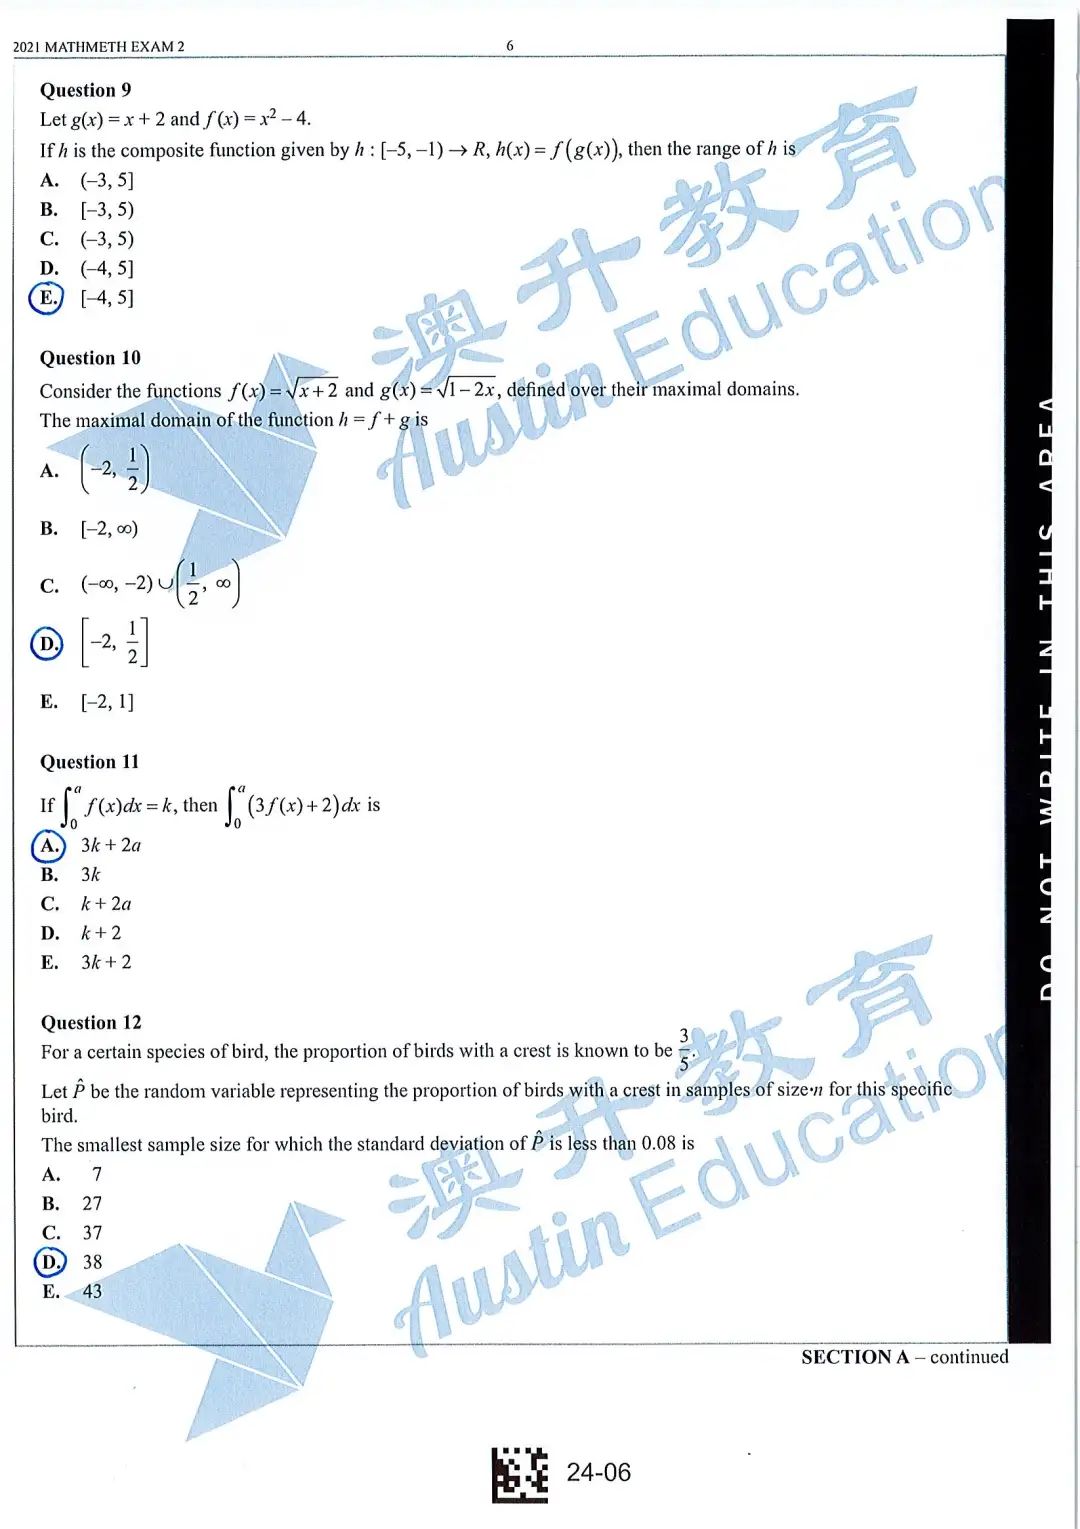 vce exam timetable 2021 - Austin Education 05